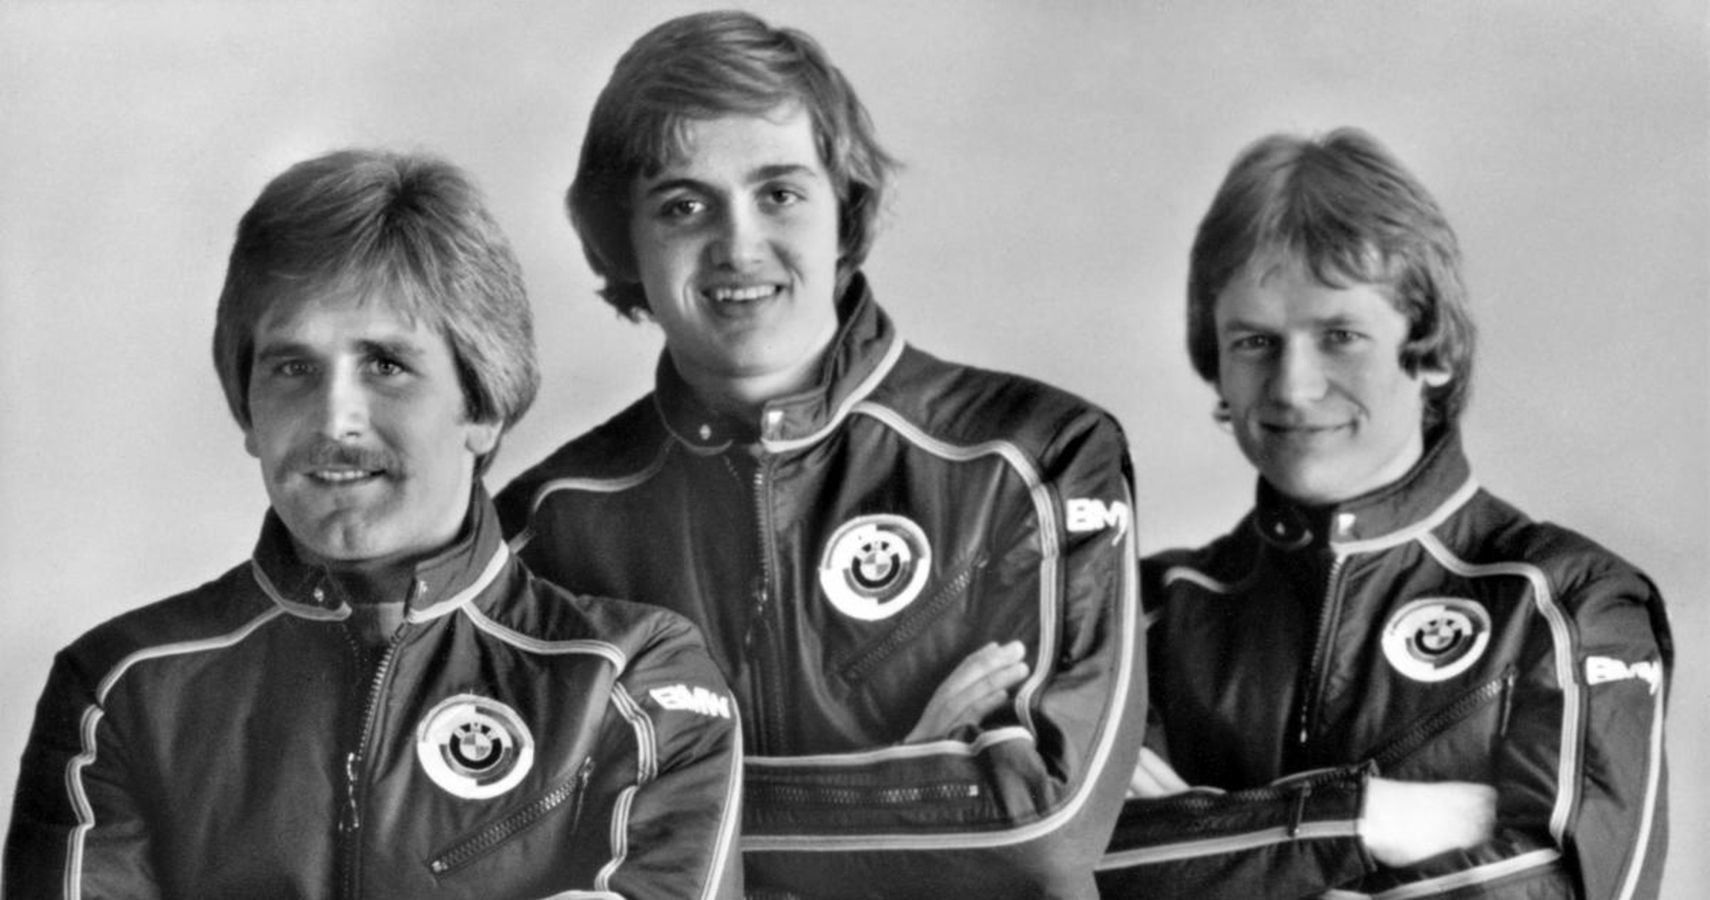 Members of the BMW Junior Team in 1977